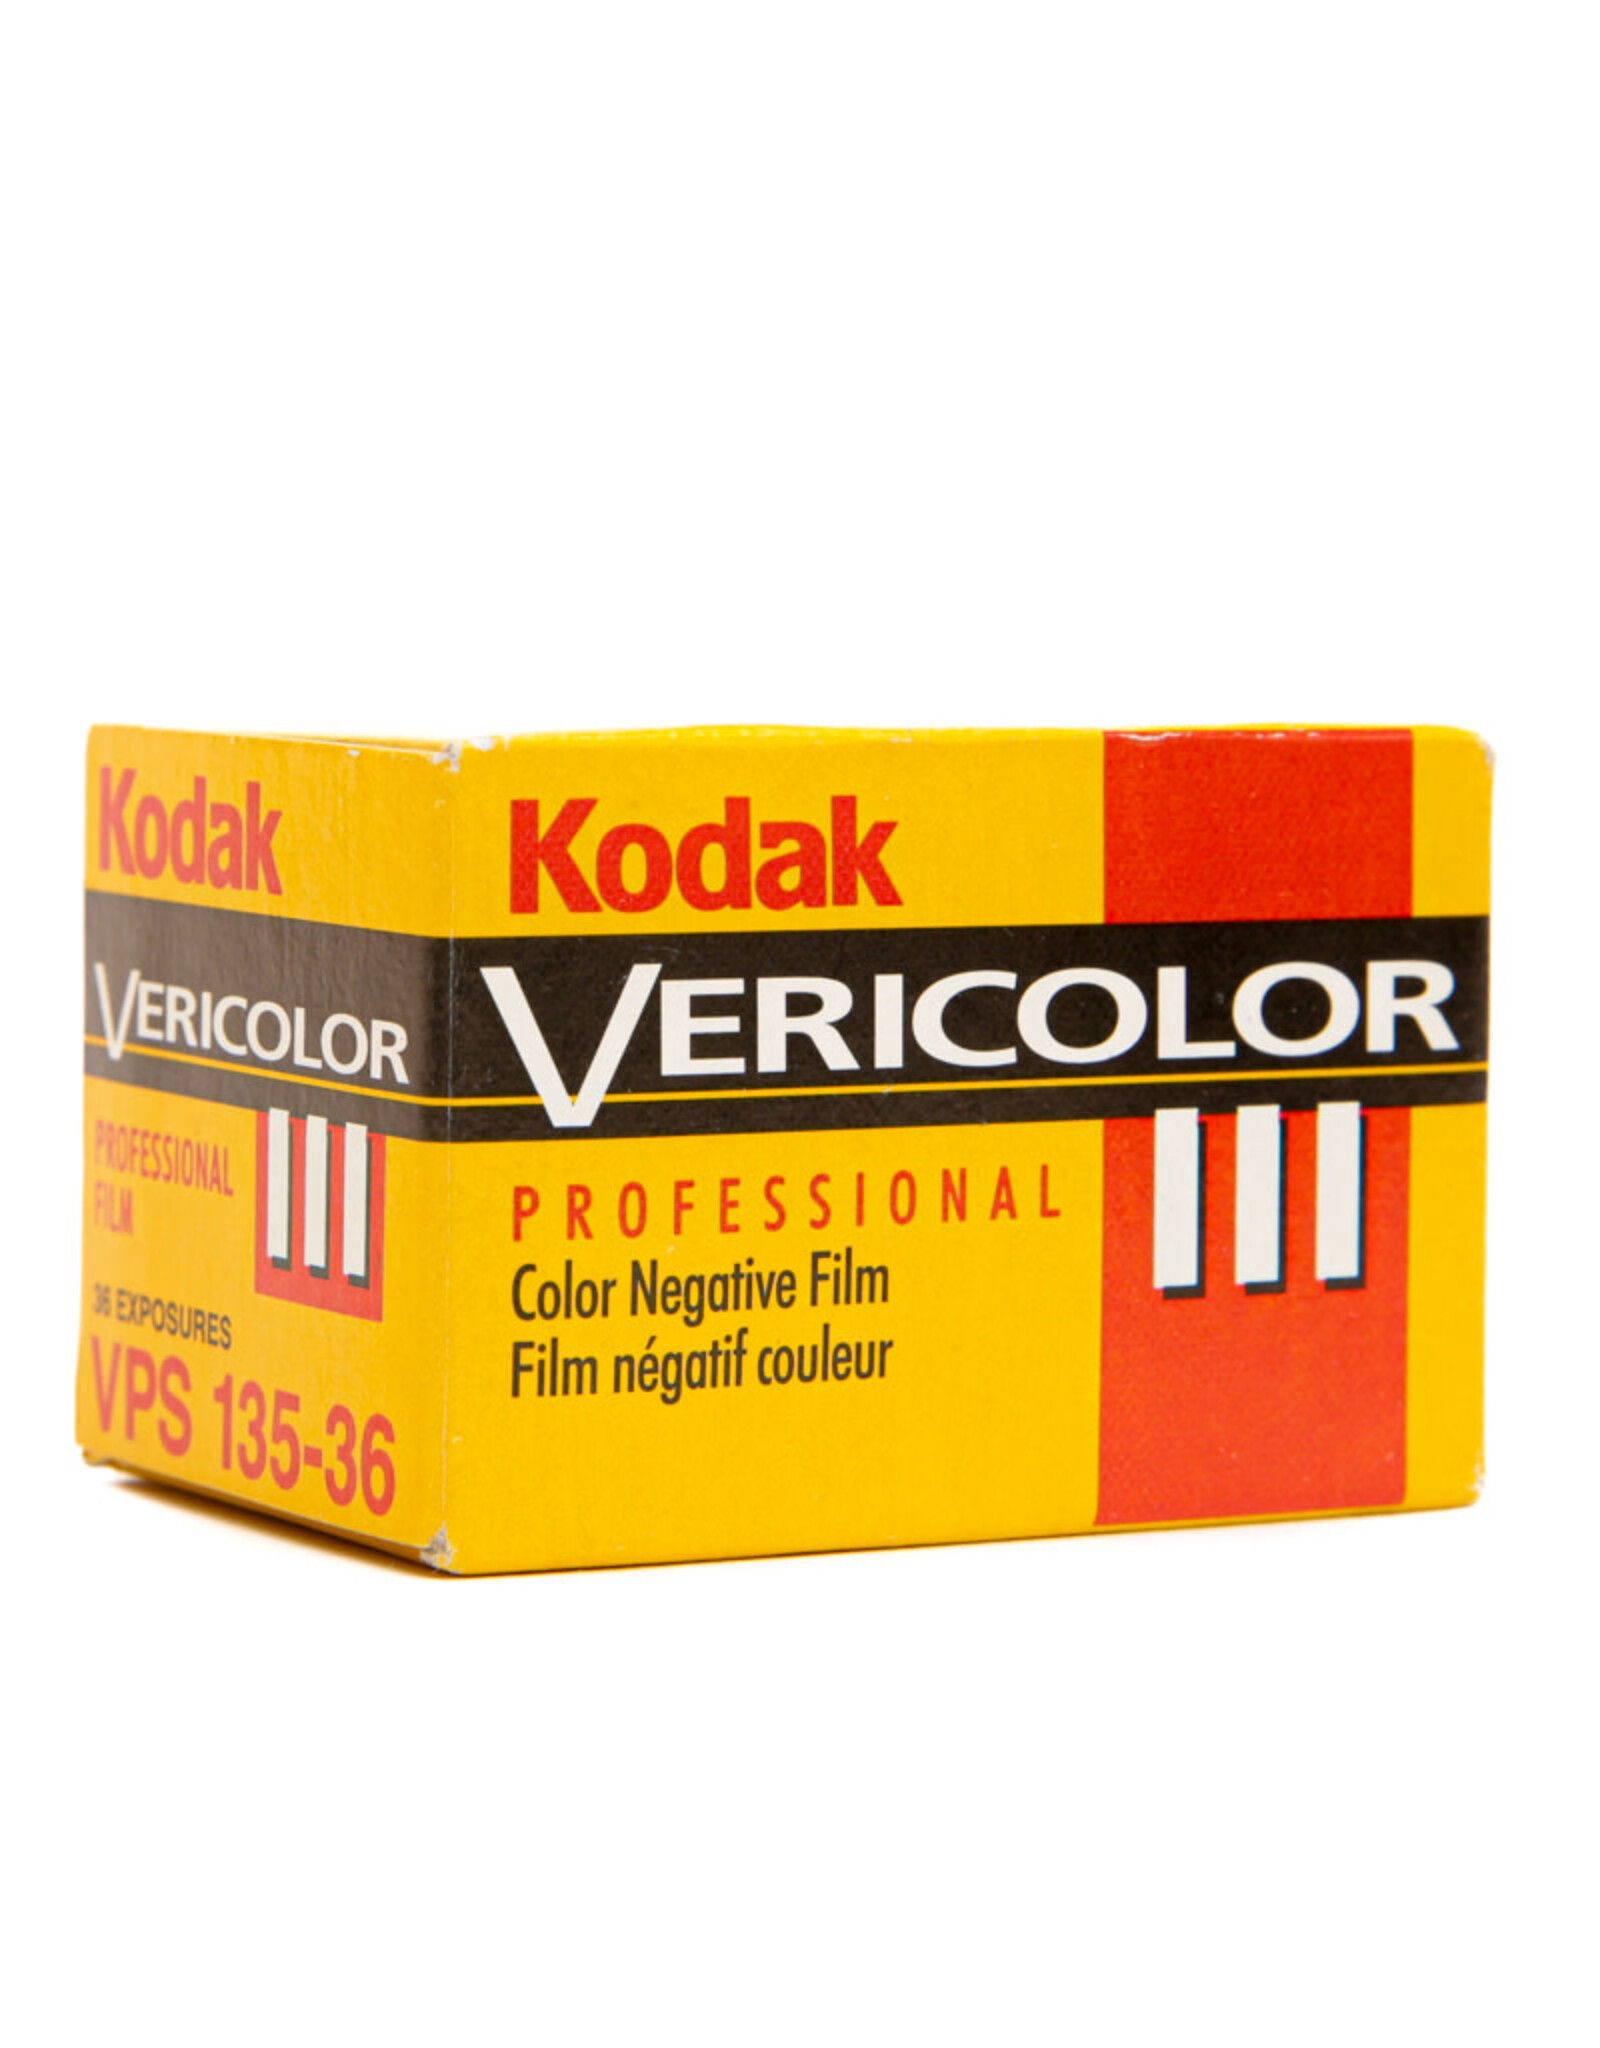 Kodak Kodak Vericolor III VPS 35mm color negative film expired 04/97, kept frozen